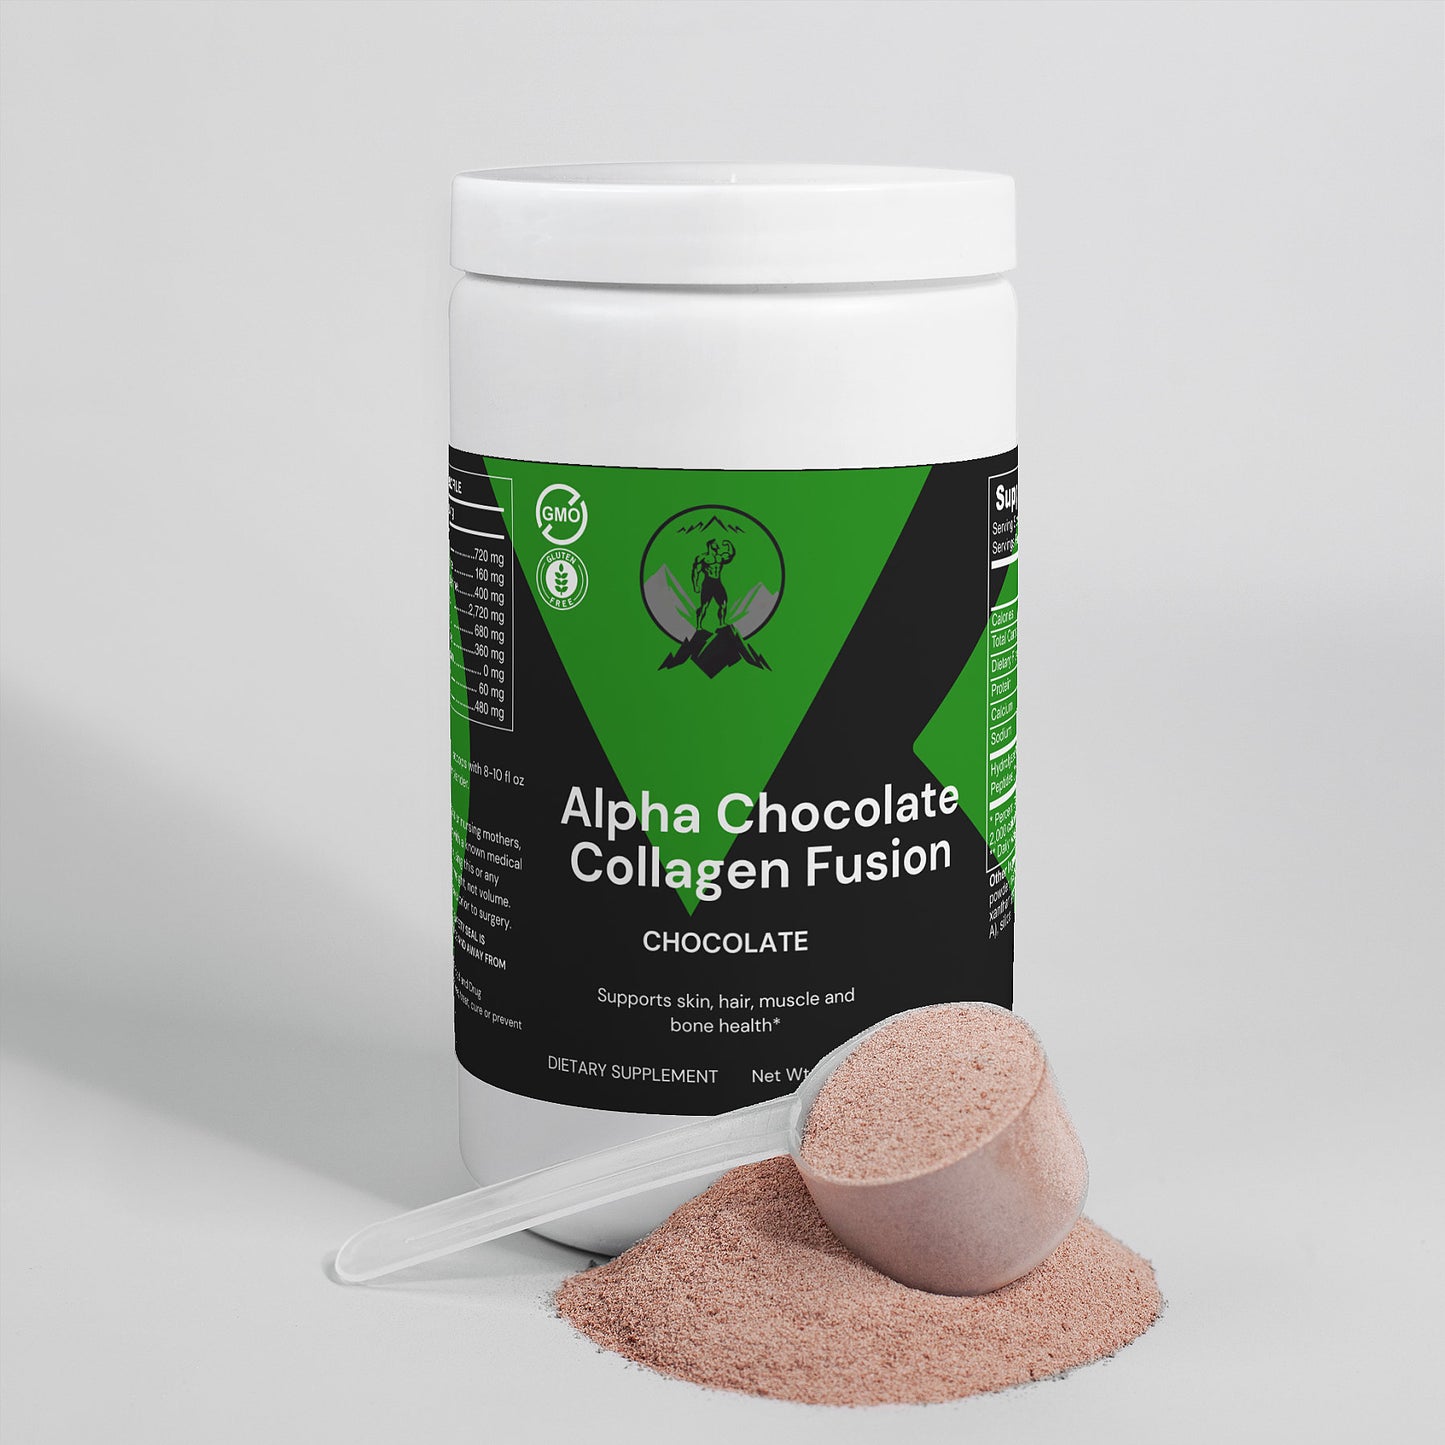 Alpha Chocolate Collagen Fusion